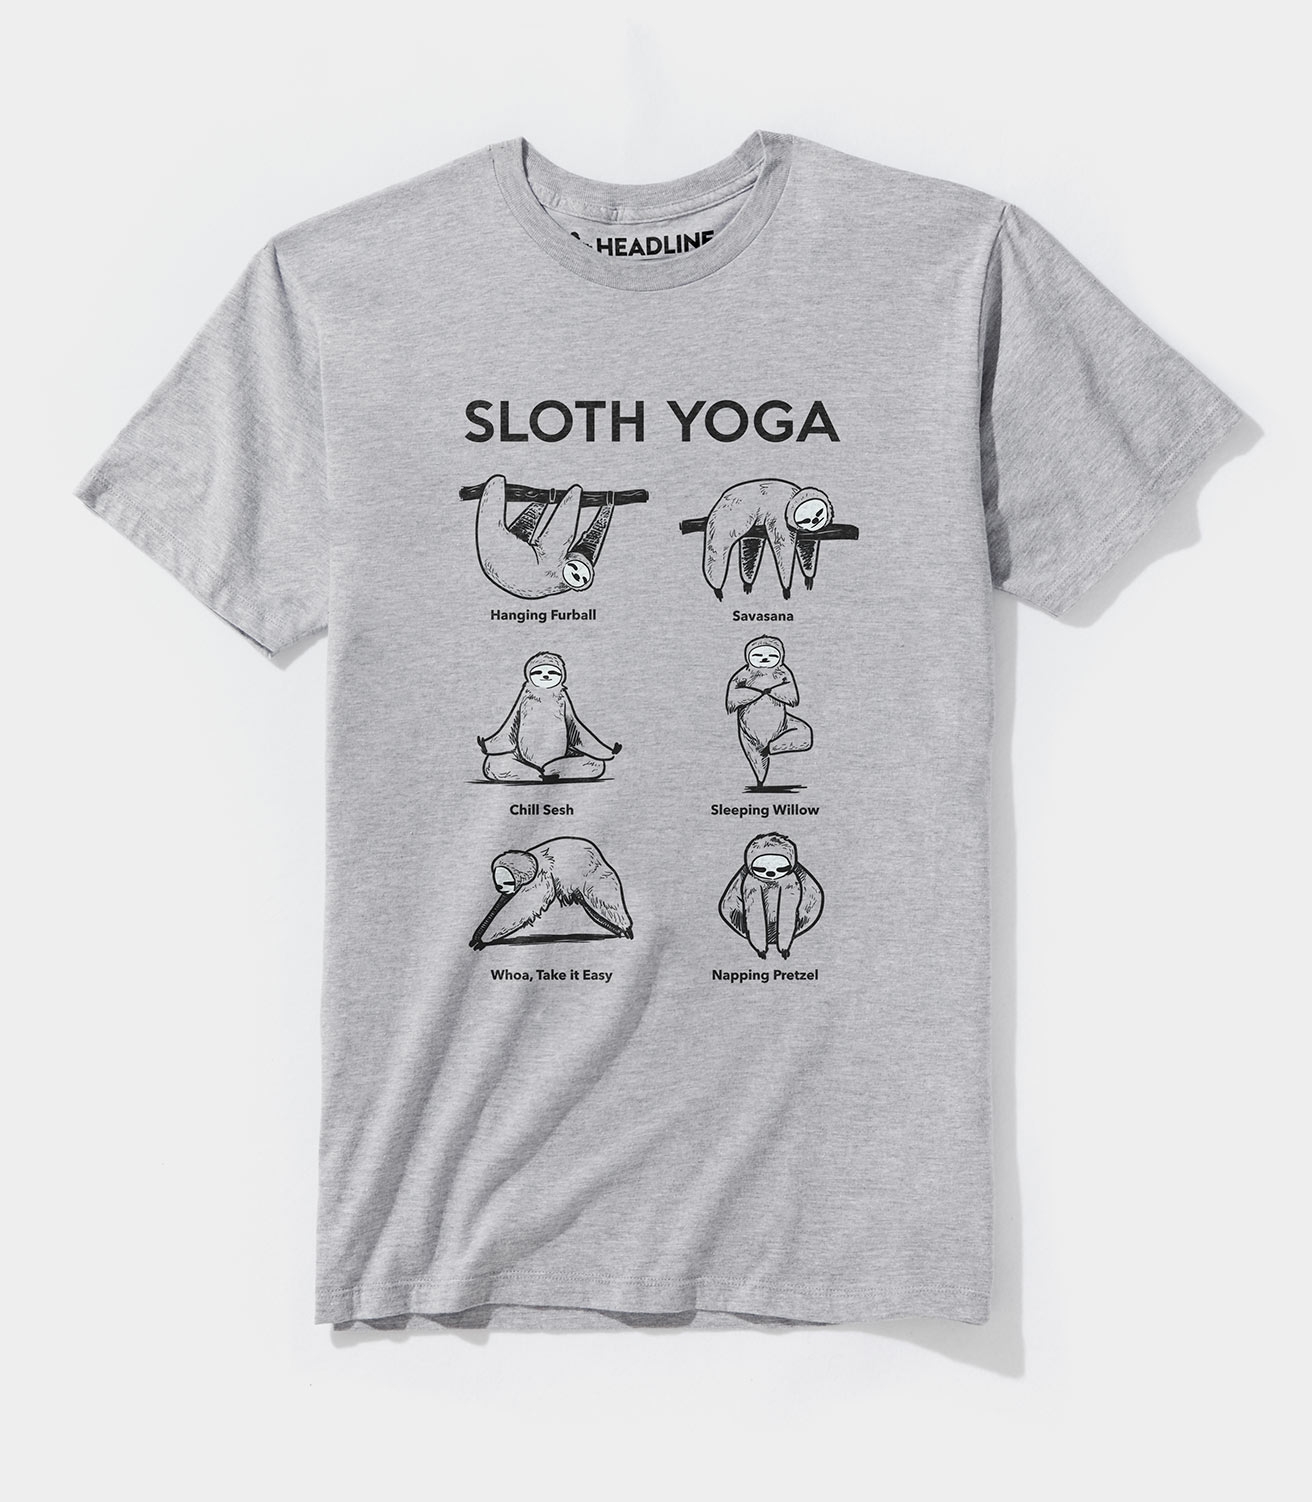 I Don't Sleep I Savasana Yoga Womens Ladies T-Shirt Tee